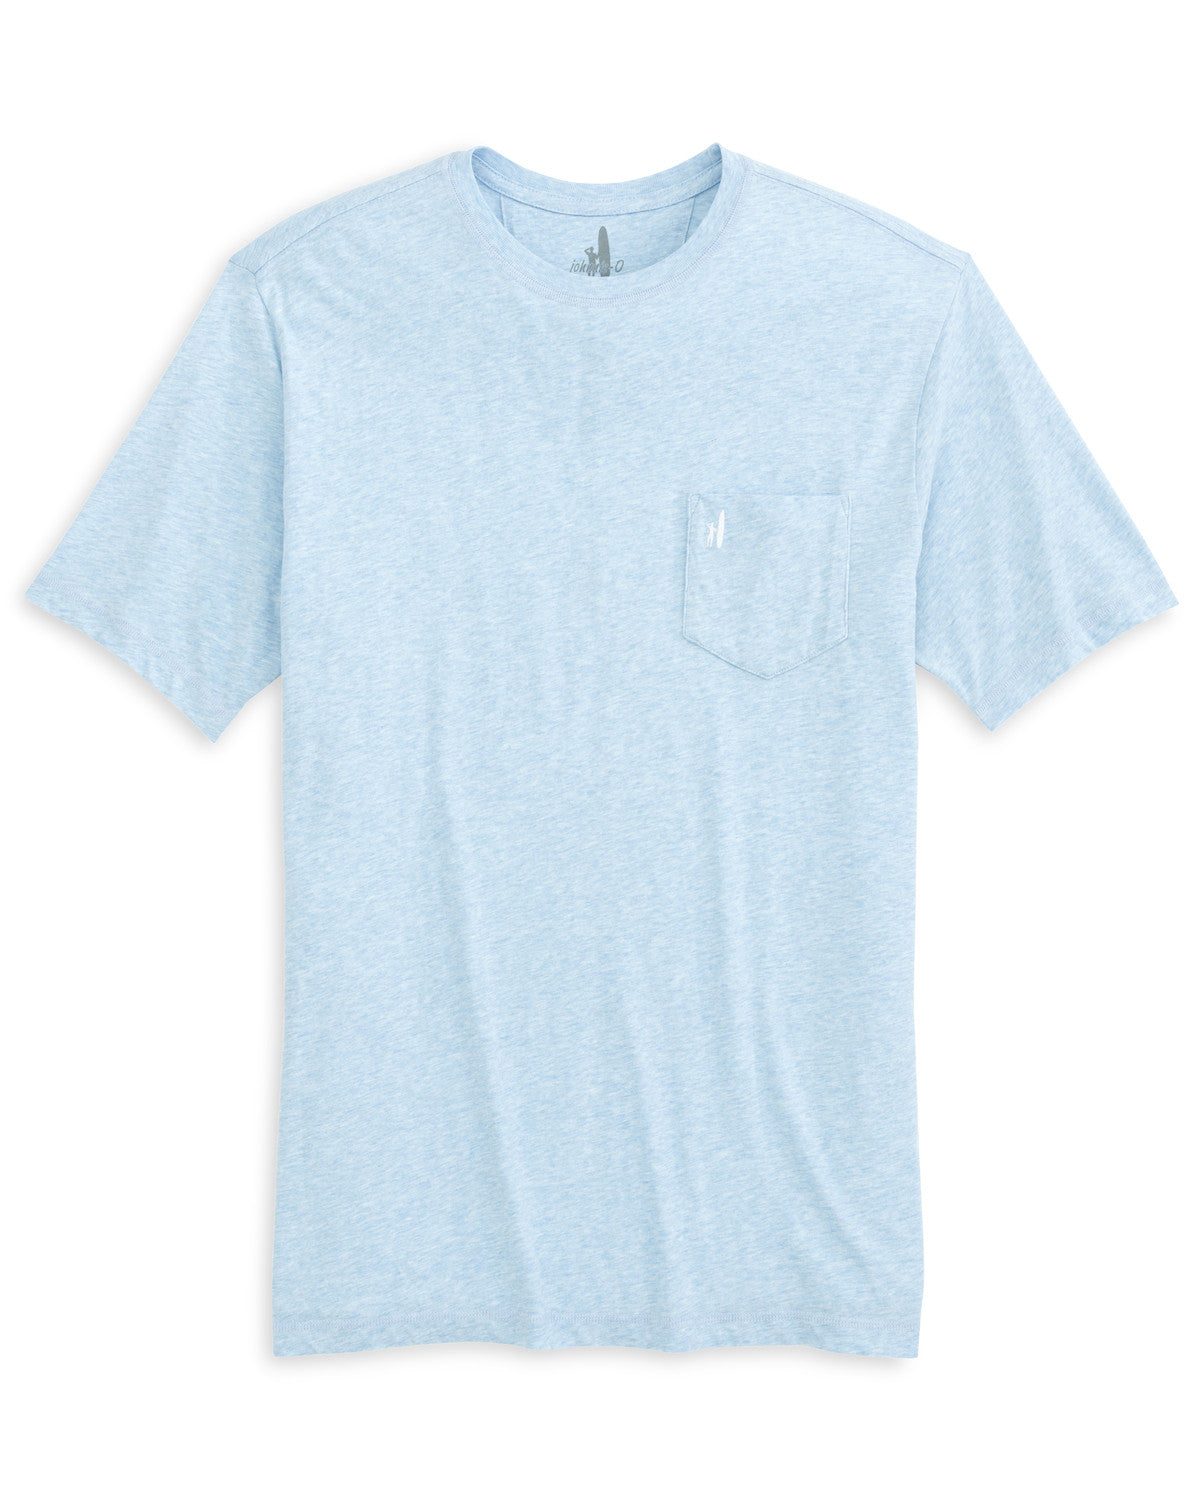 Johnnie-O Heathered Dale T-Shirt (4 Colors)